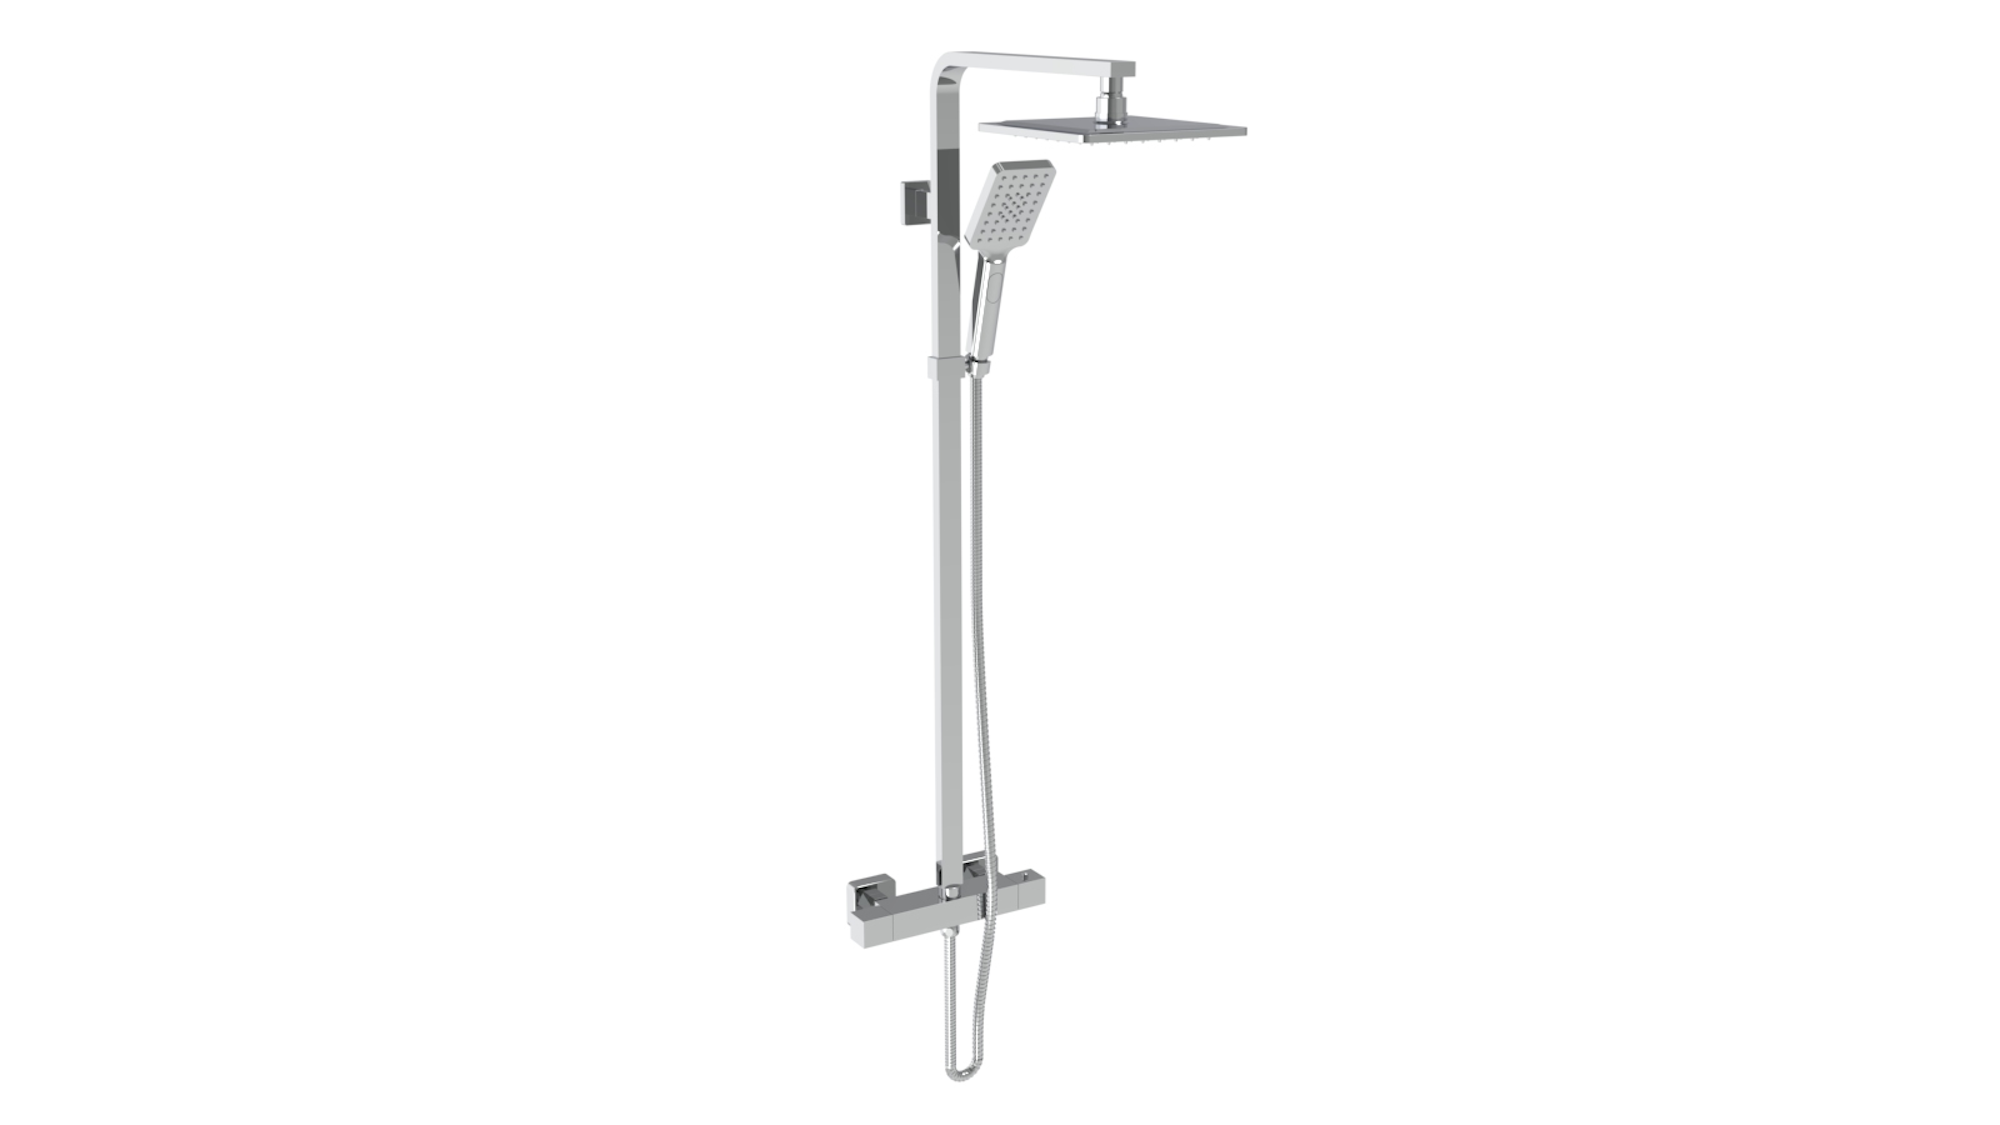 TOOGA 2 way shower kit with bar valve - Chrome